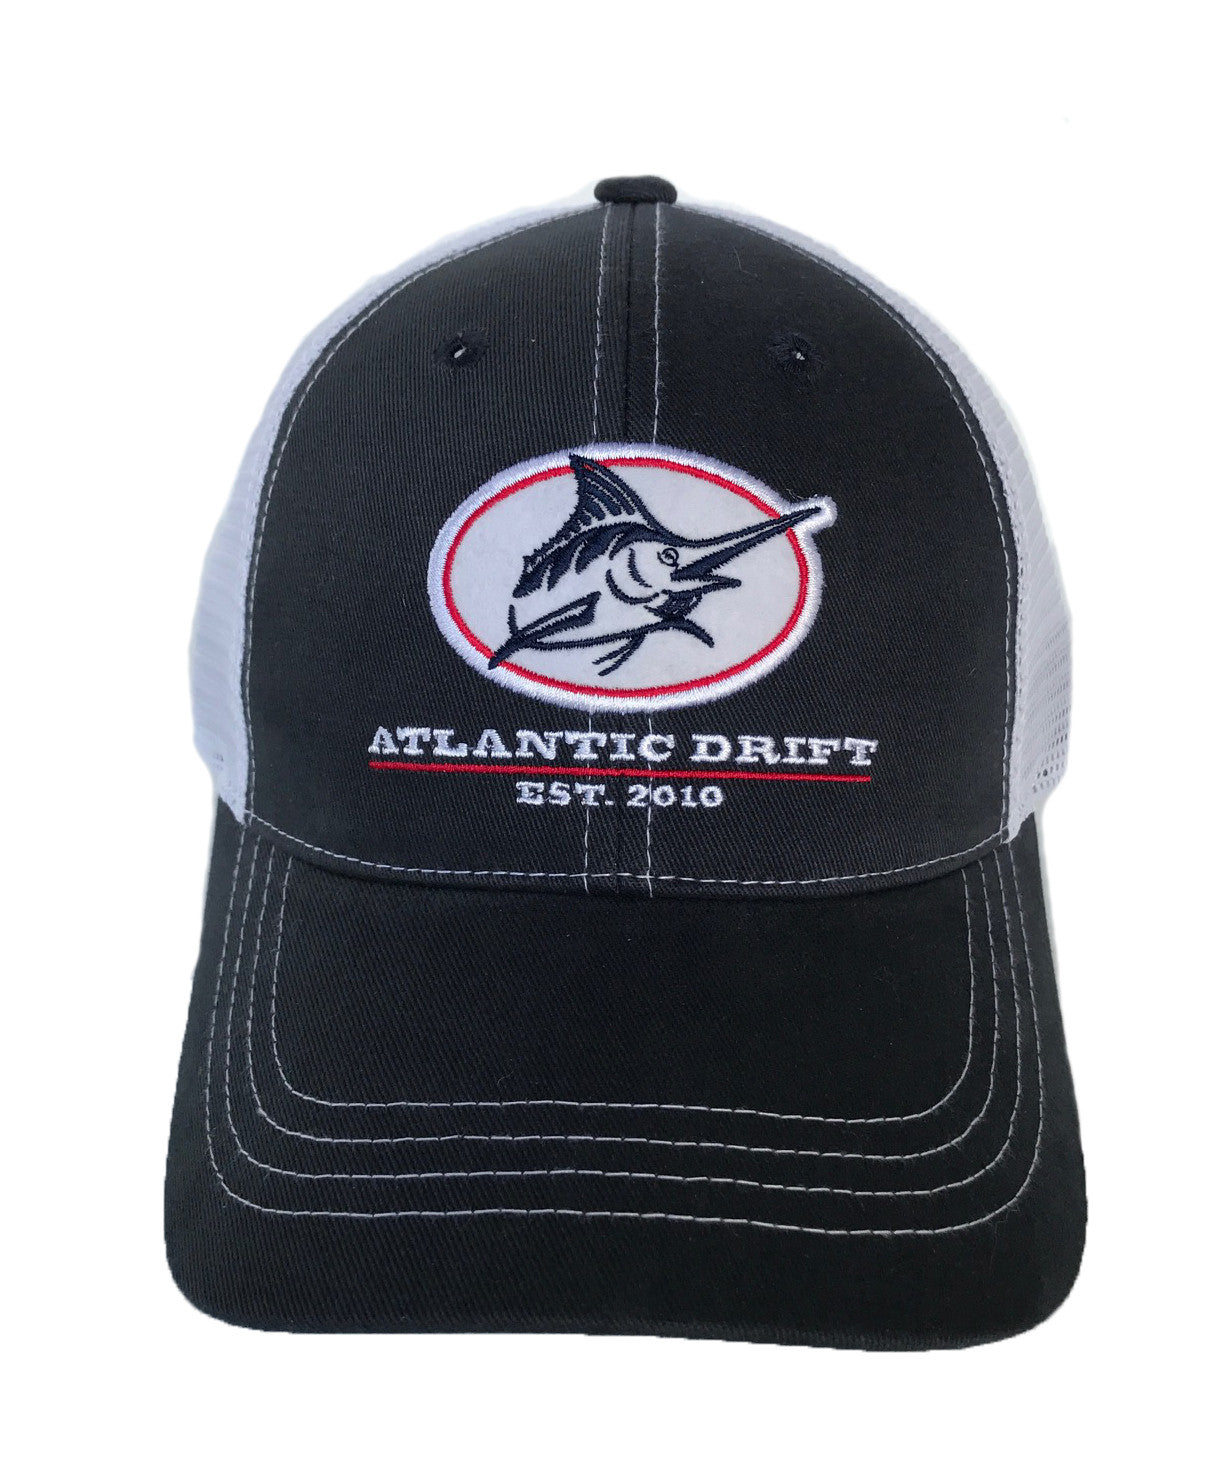 Atlantic Drift Outlaw Marlin Mesh Back Hat